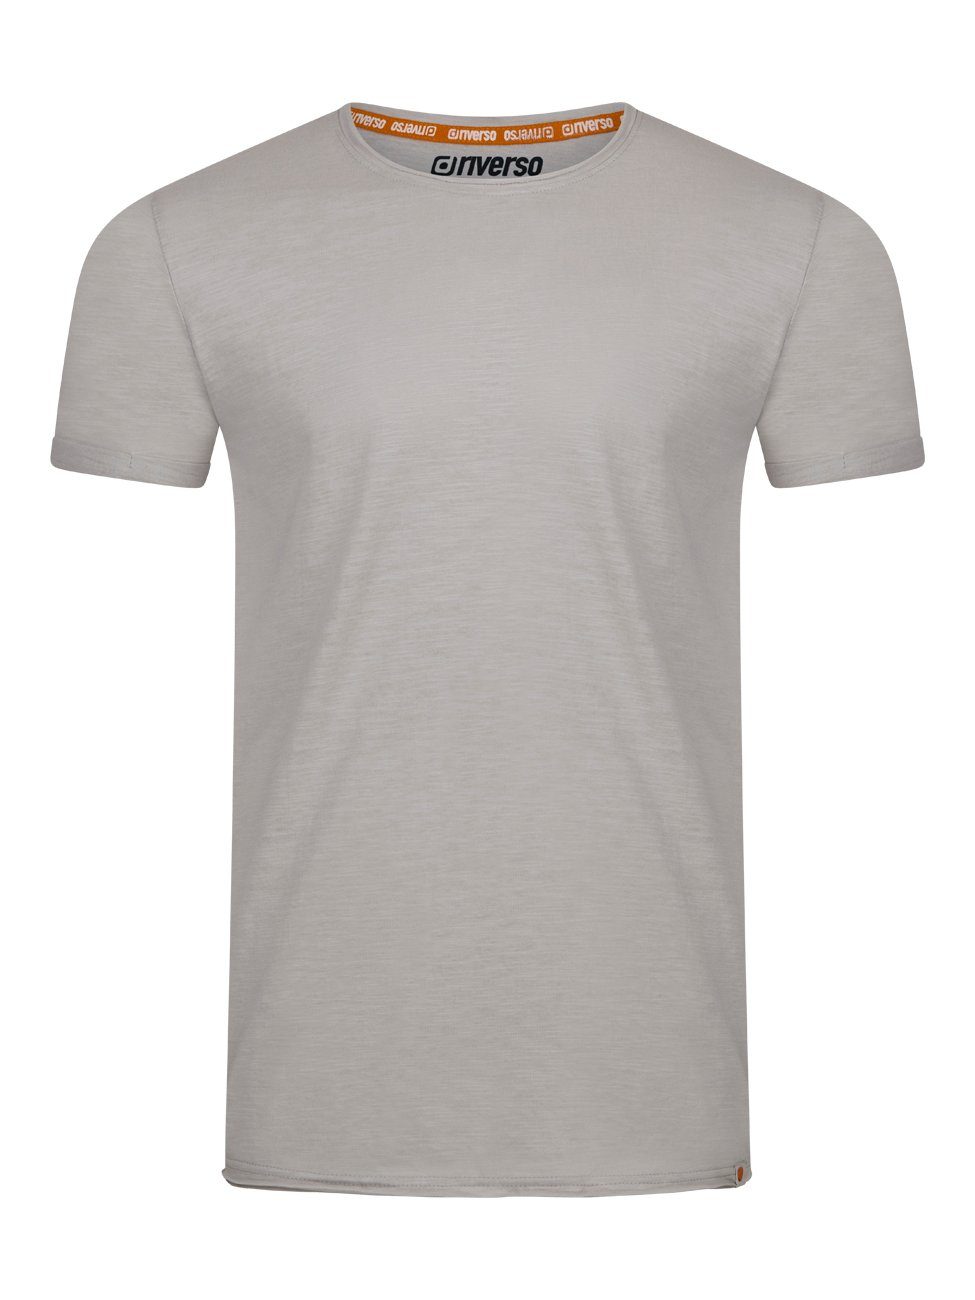 Shirt Tee Herren T-Shirt Shirt Regular riverso 100% (1-tlg) aus Fit Smoke Grey Kurzarm mit RIVLenny Basic Rundhalsausschnitt Baumwolle